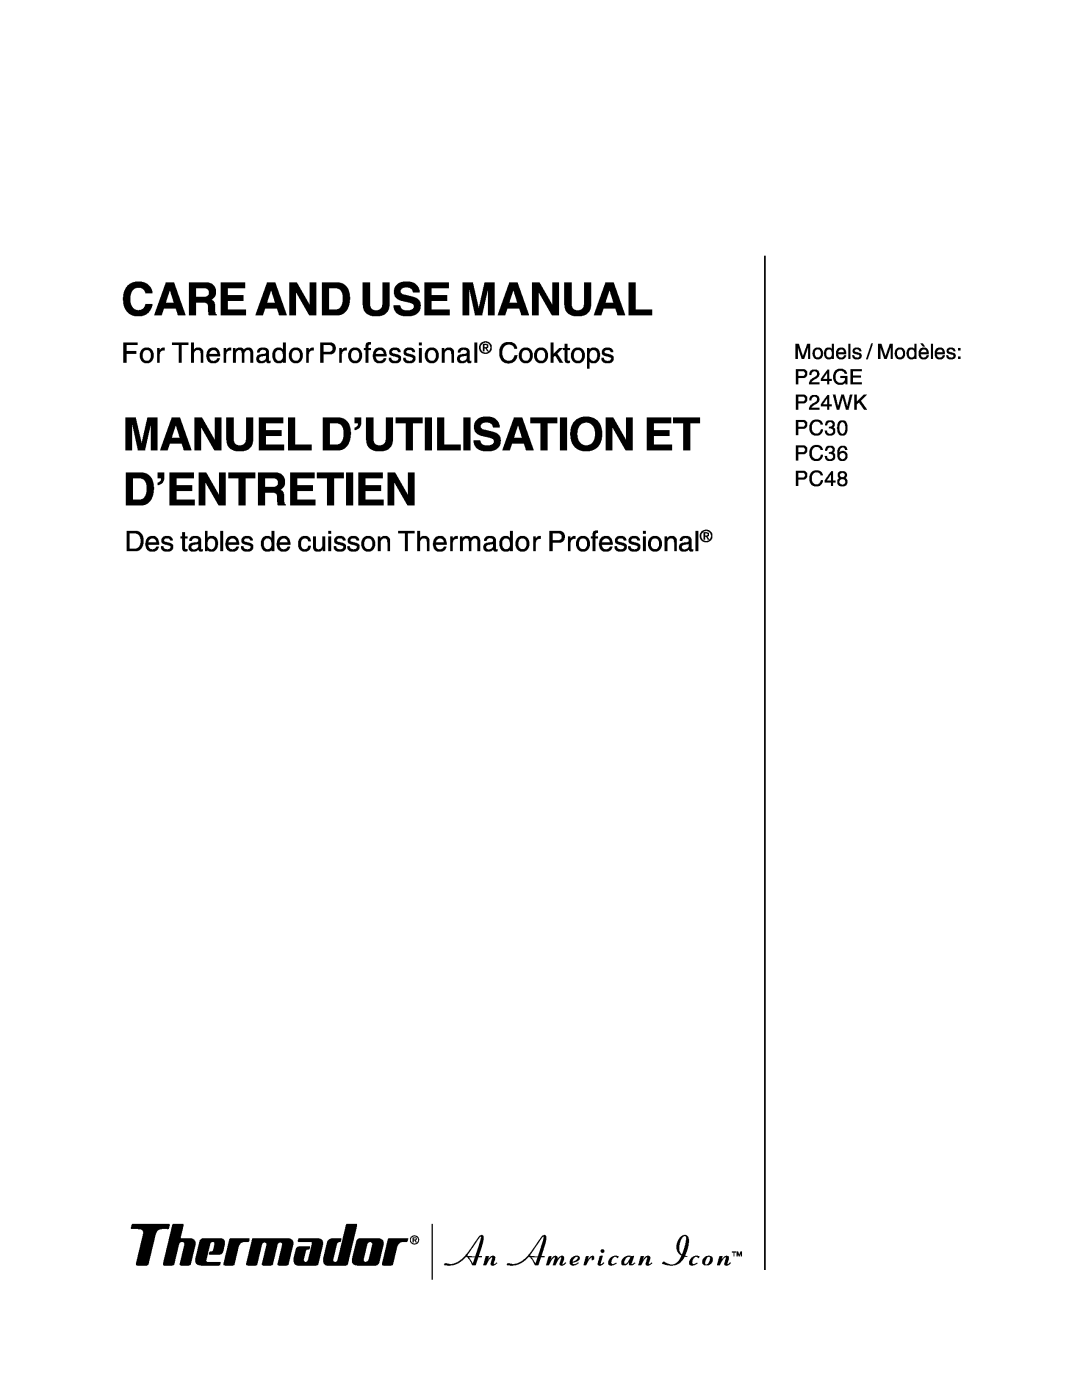 Thermador P24GE, PC30 manuel dutilisation Care And Use Manual, Manuel D’Utilisation Et D’Entretien 